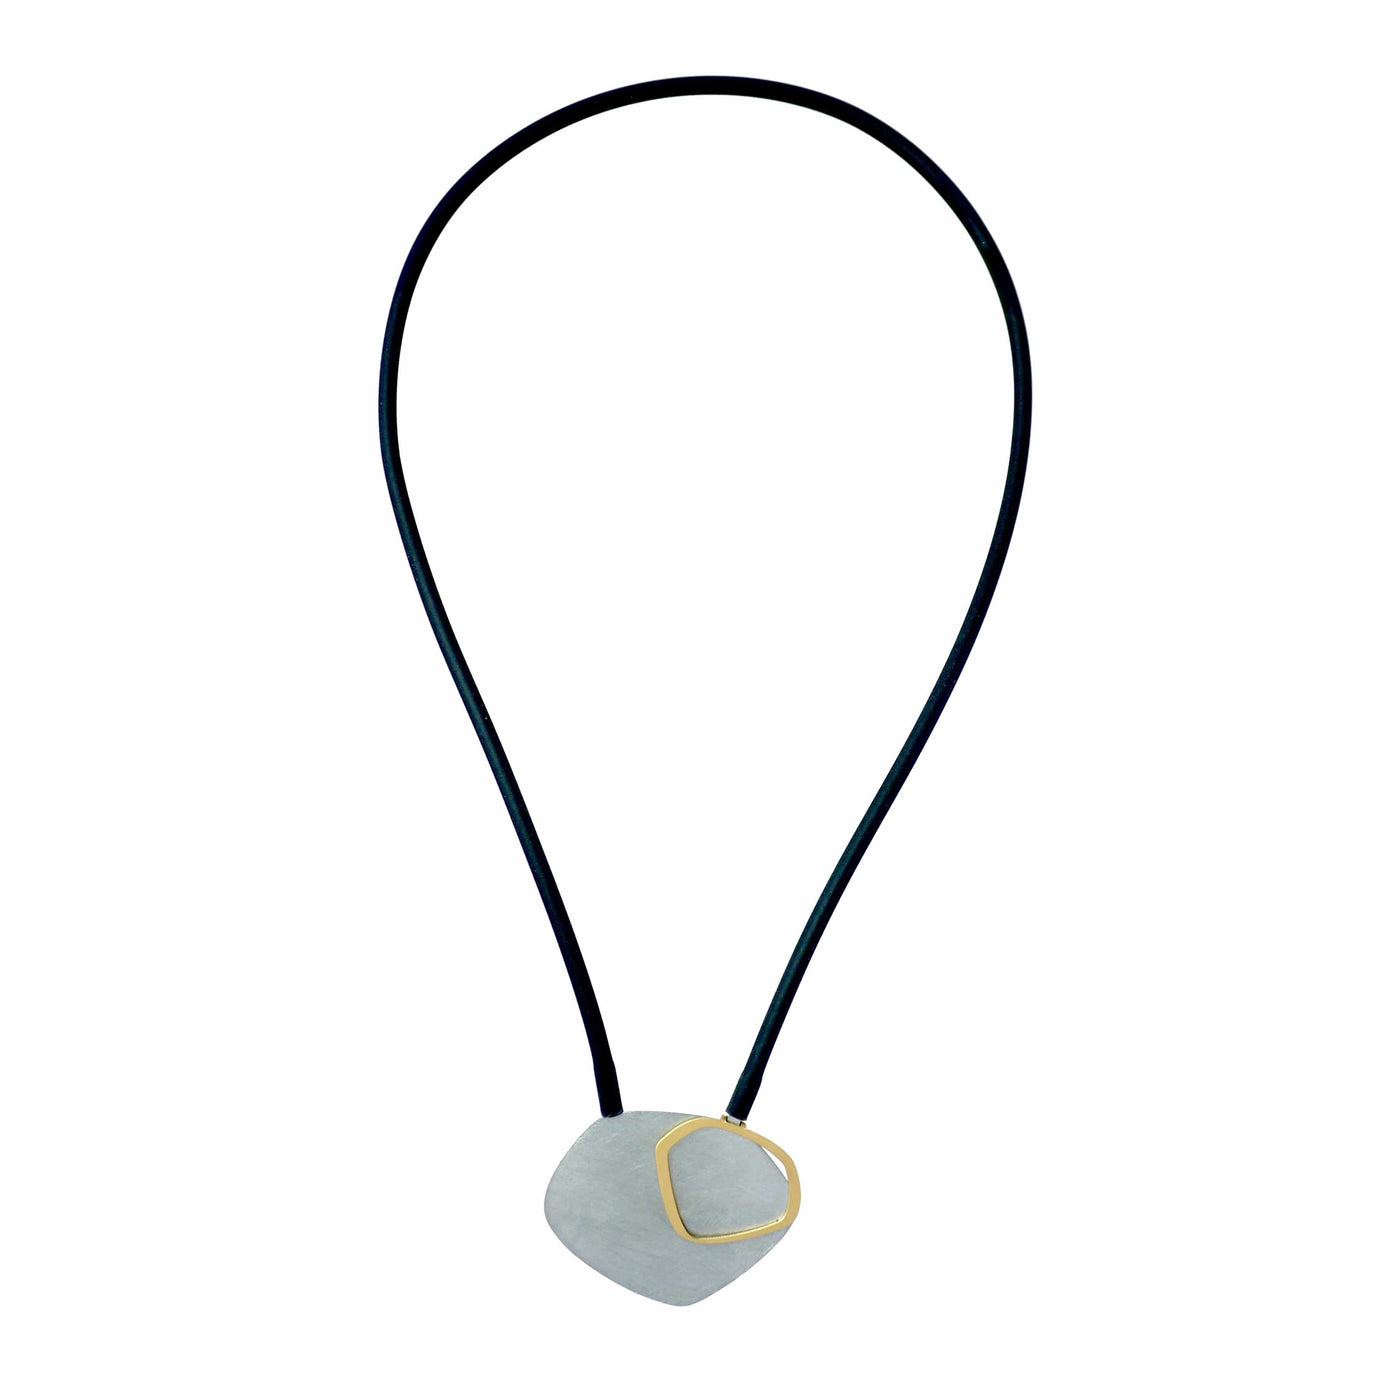 X2 Small Necklace - Gold/ Black - inSync design